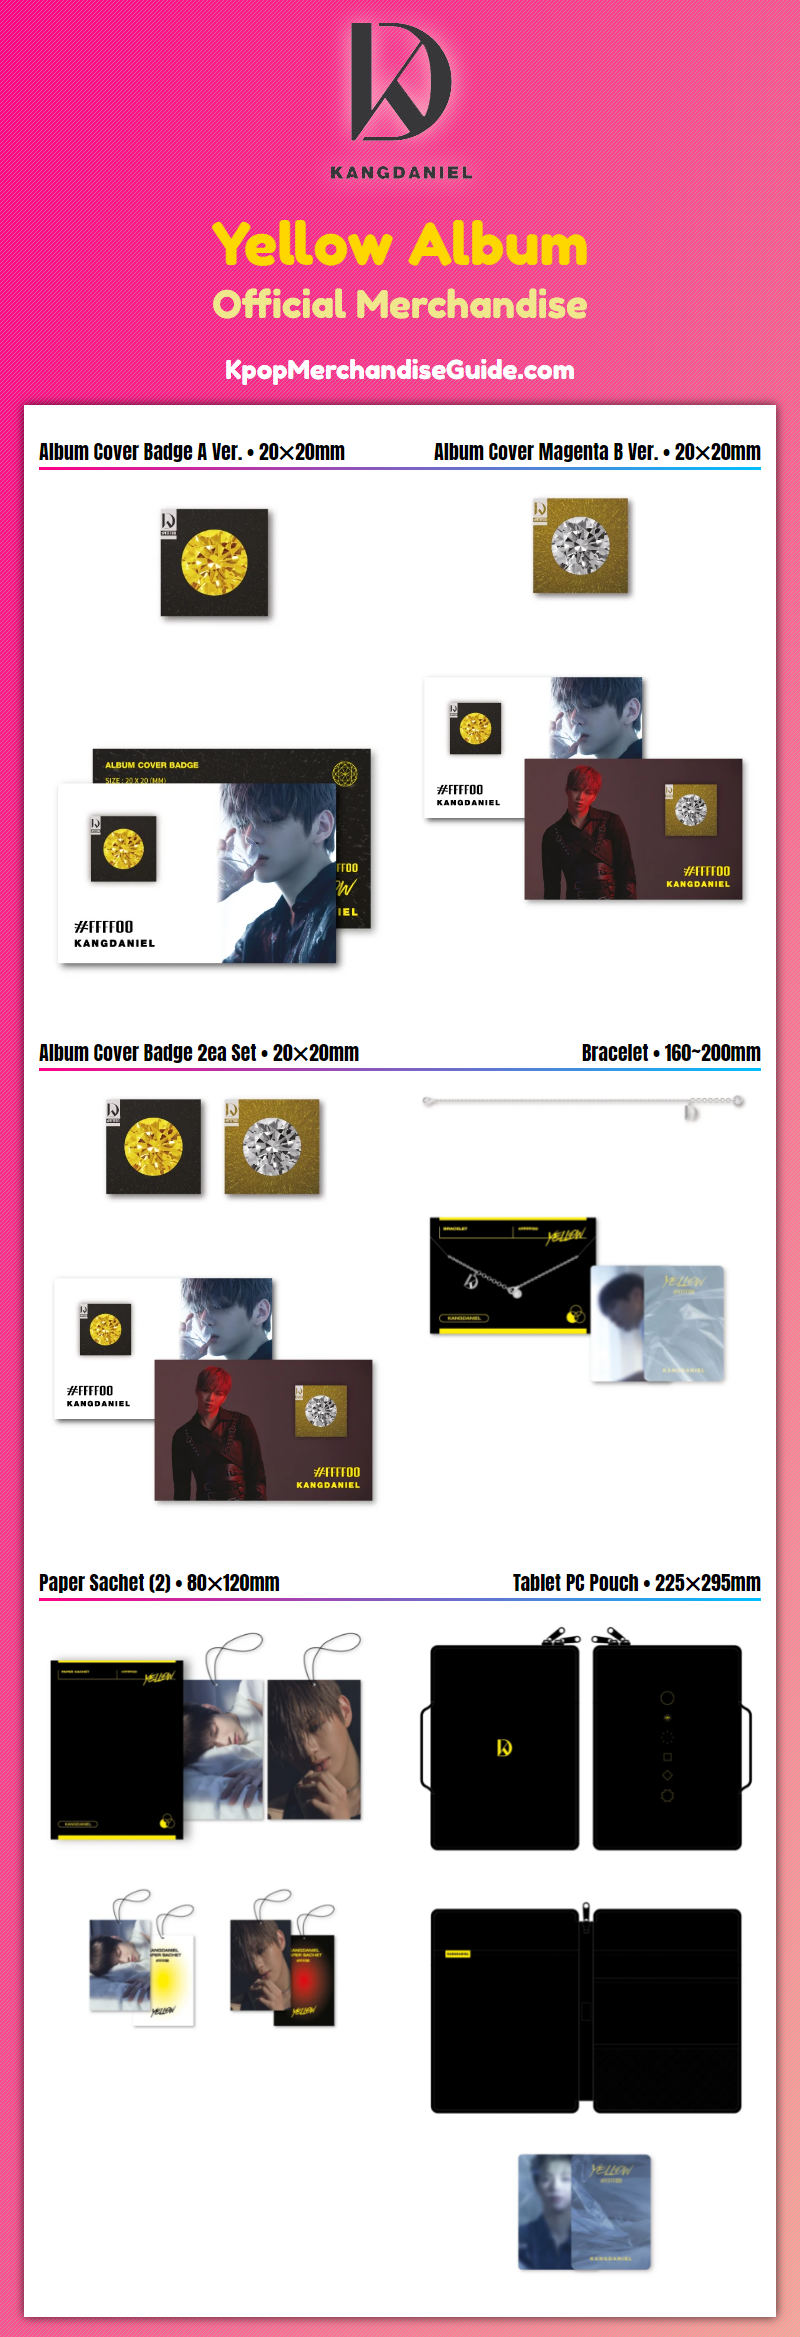 Kang Daniel Yellow Album Merchandise